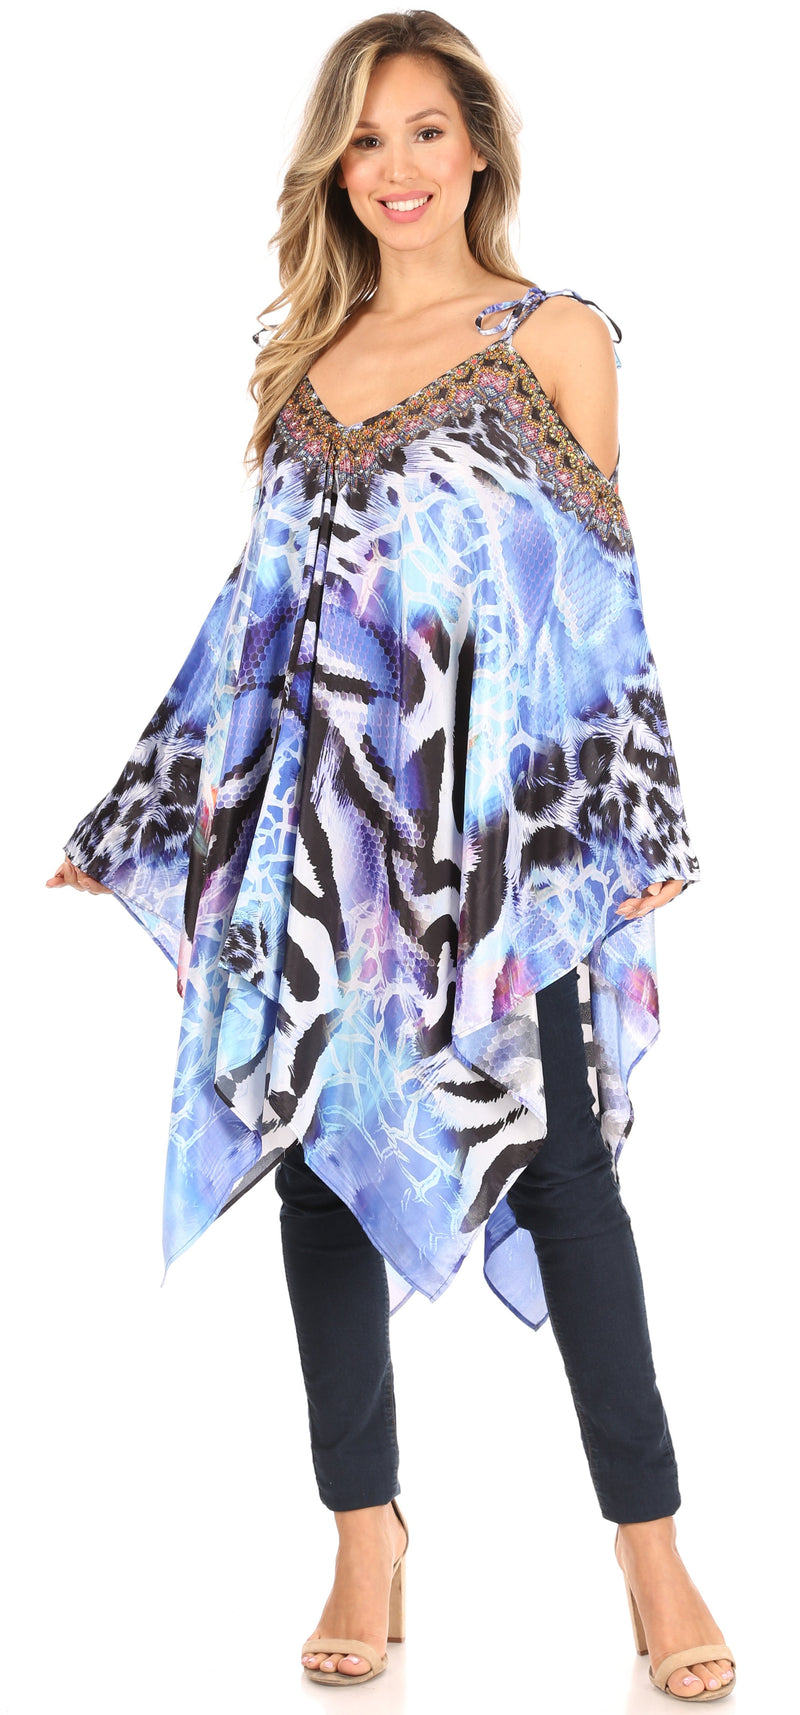 Sakkas Zula Sleeveless Asymetrical Top Blouse with Colorful Print and Rhinestones